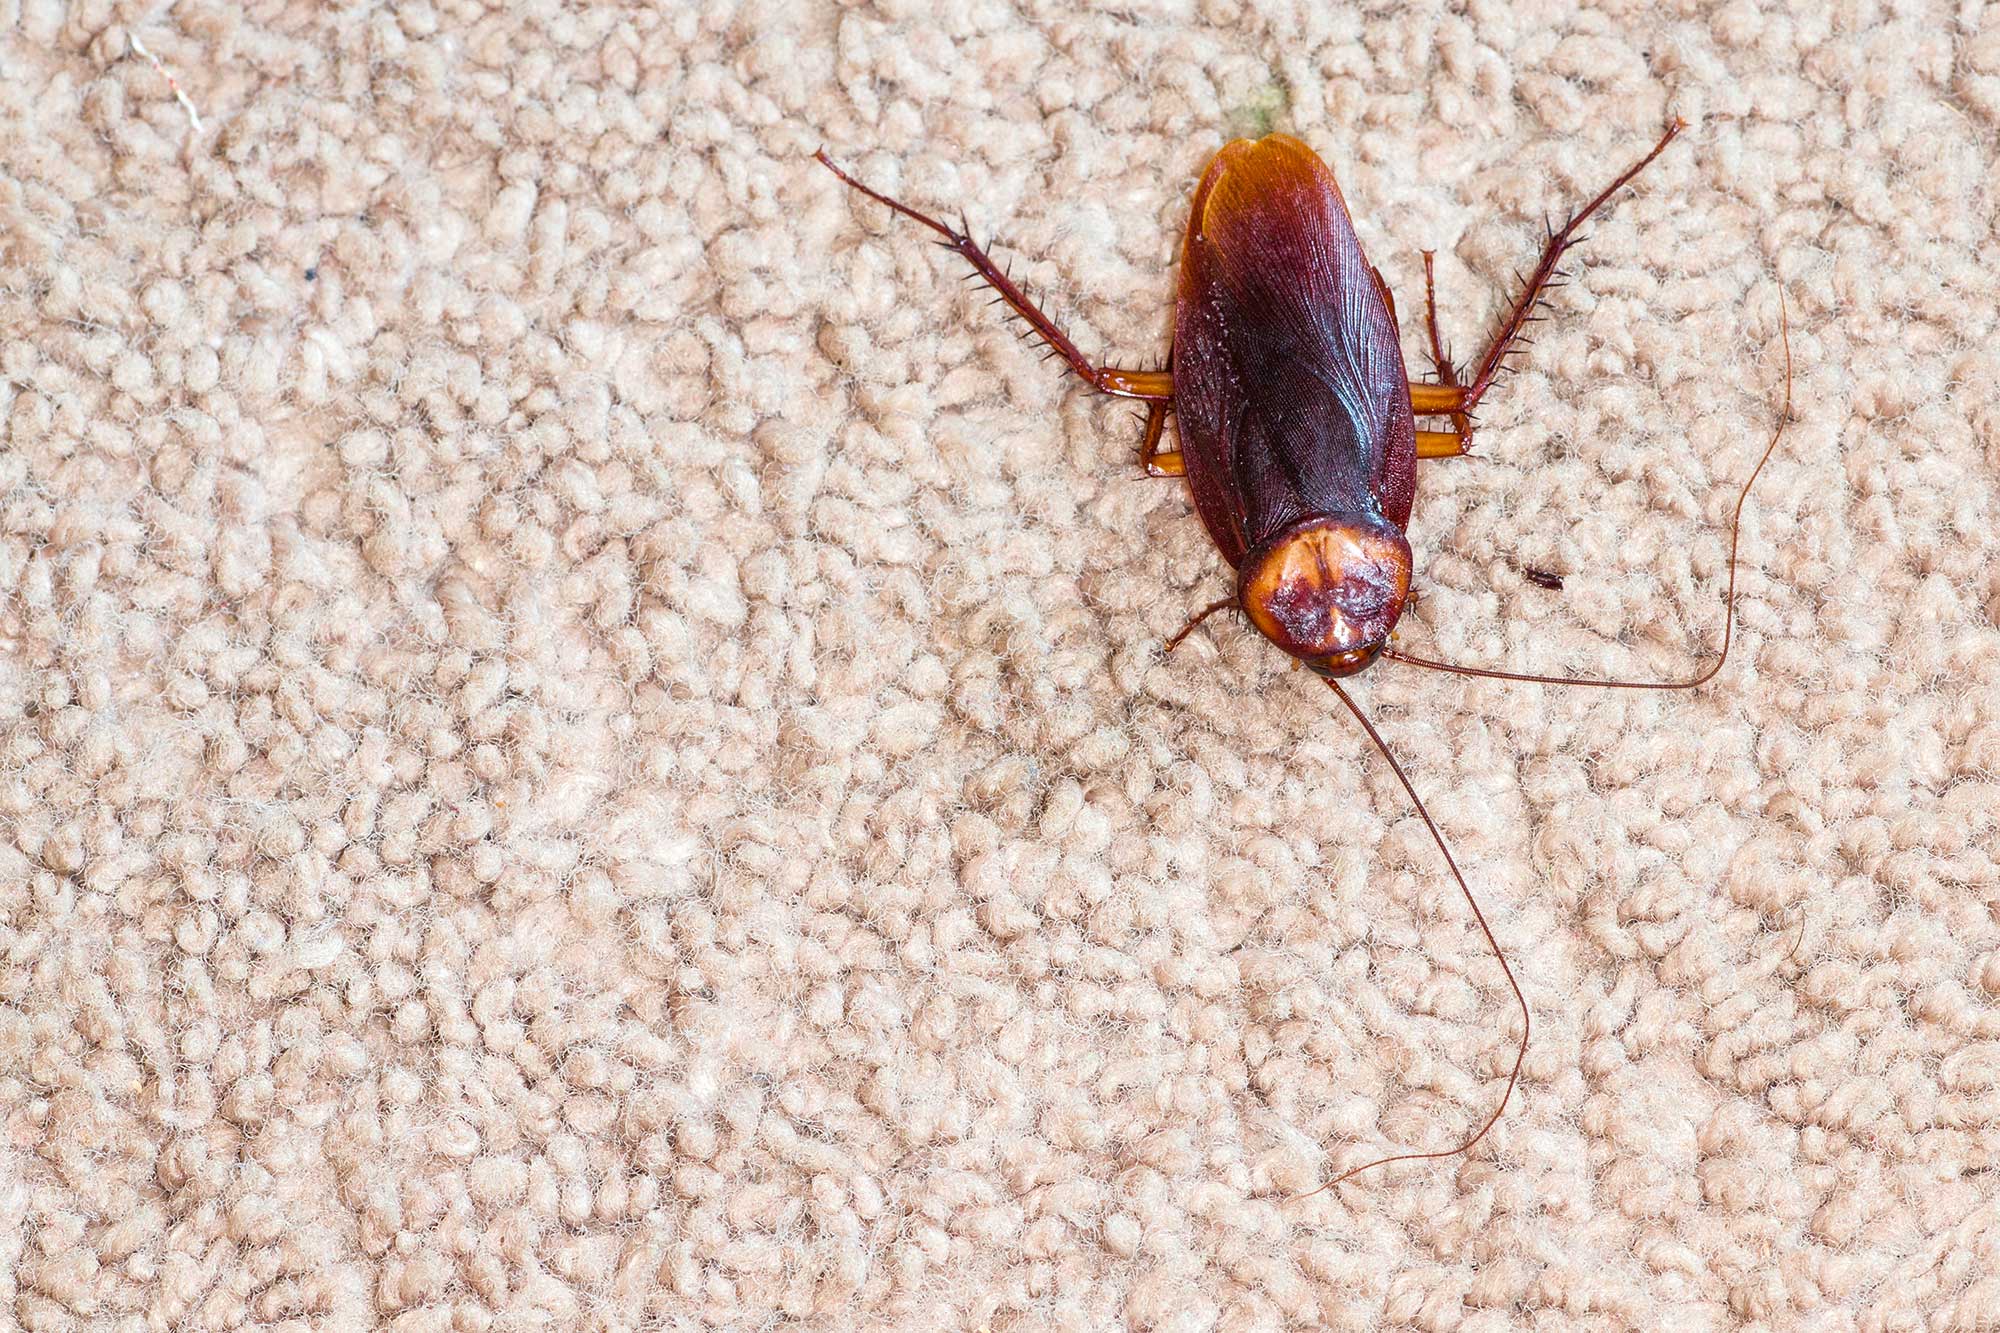 Cockroach on carpet